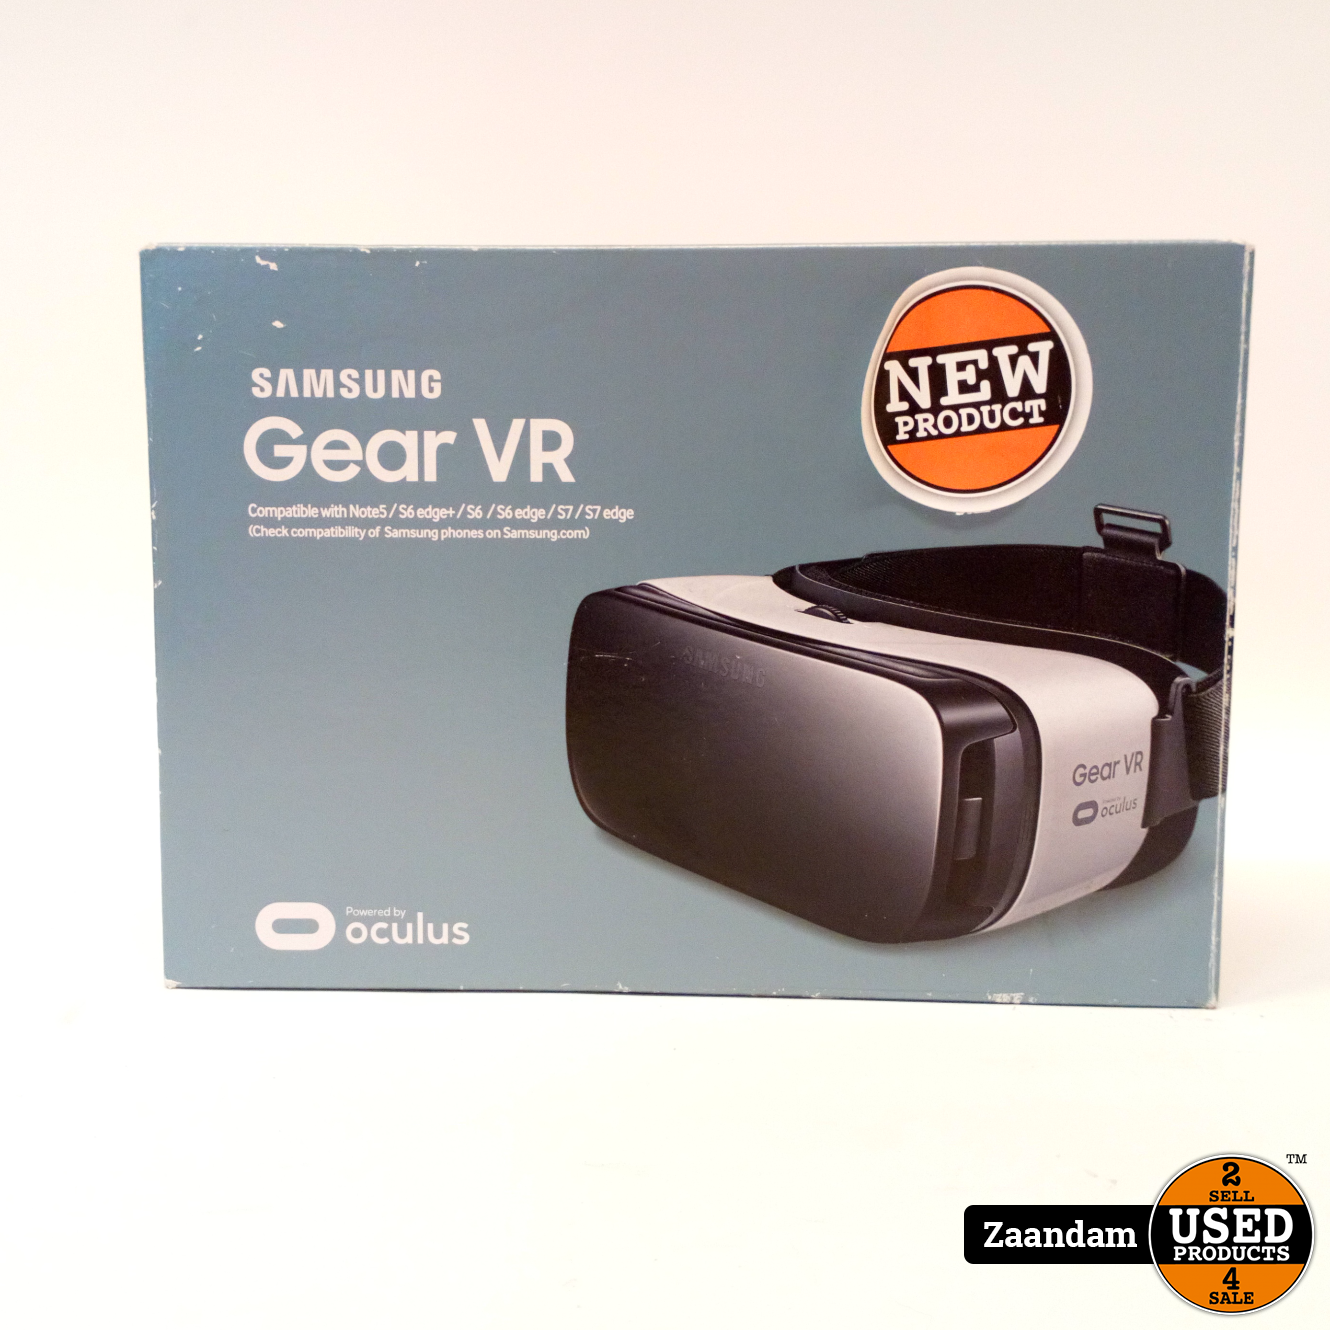 Trouwens web biografie Samsung Galaxy Gear VR Note5/S6/S7 | Nieuw in doos - Used Products Zaandam